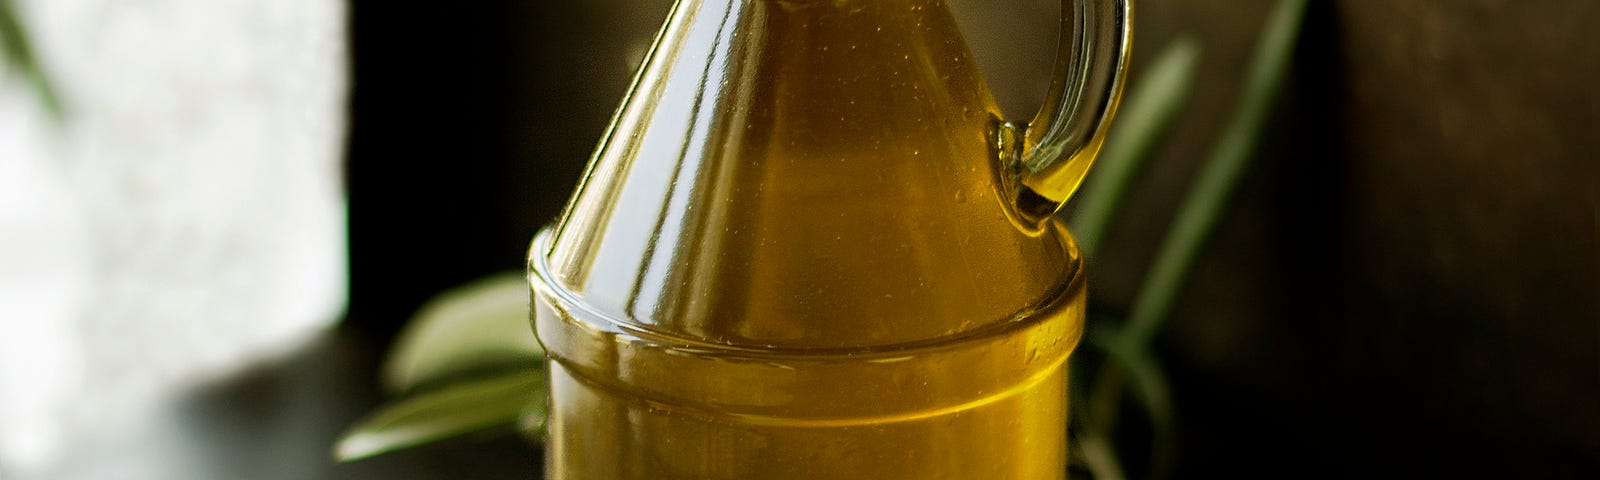 Cooking oil in a glass jar, alongside some olives